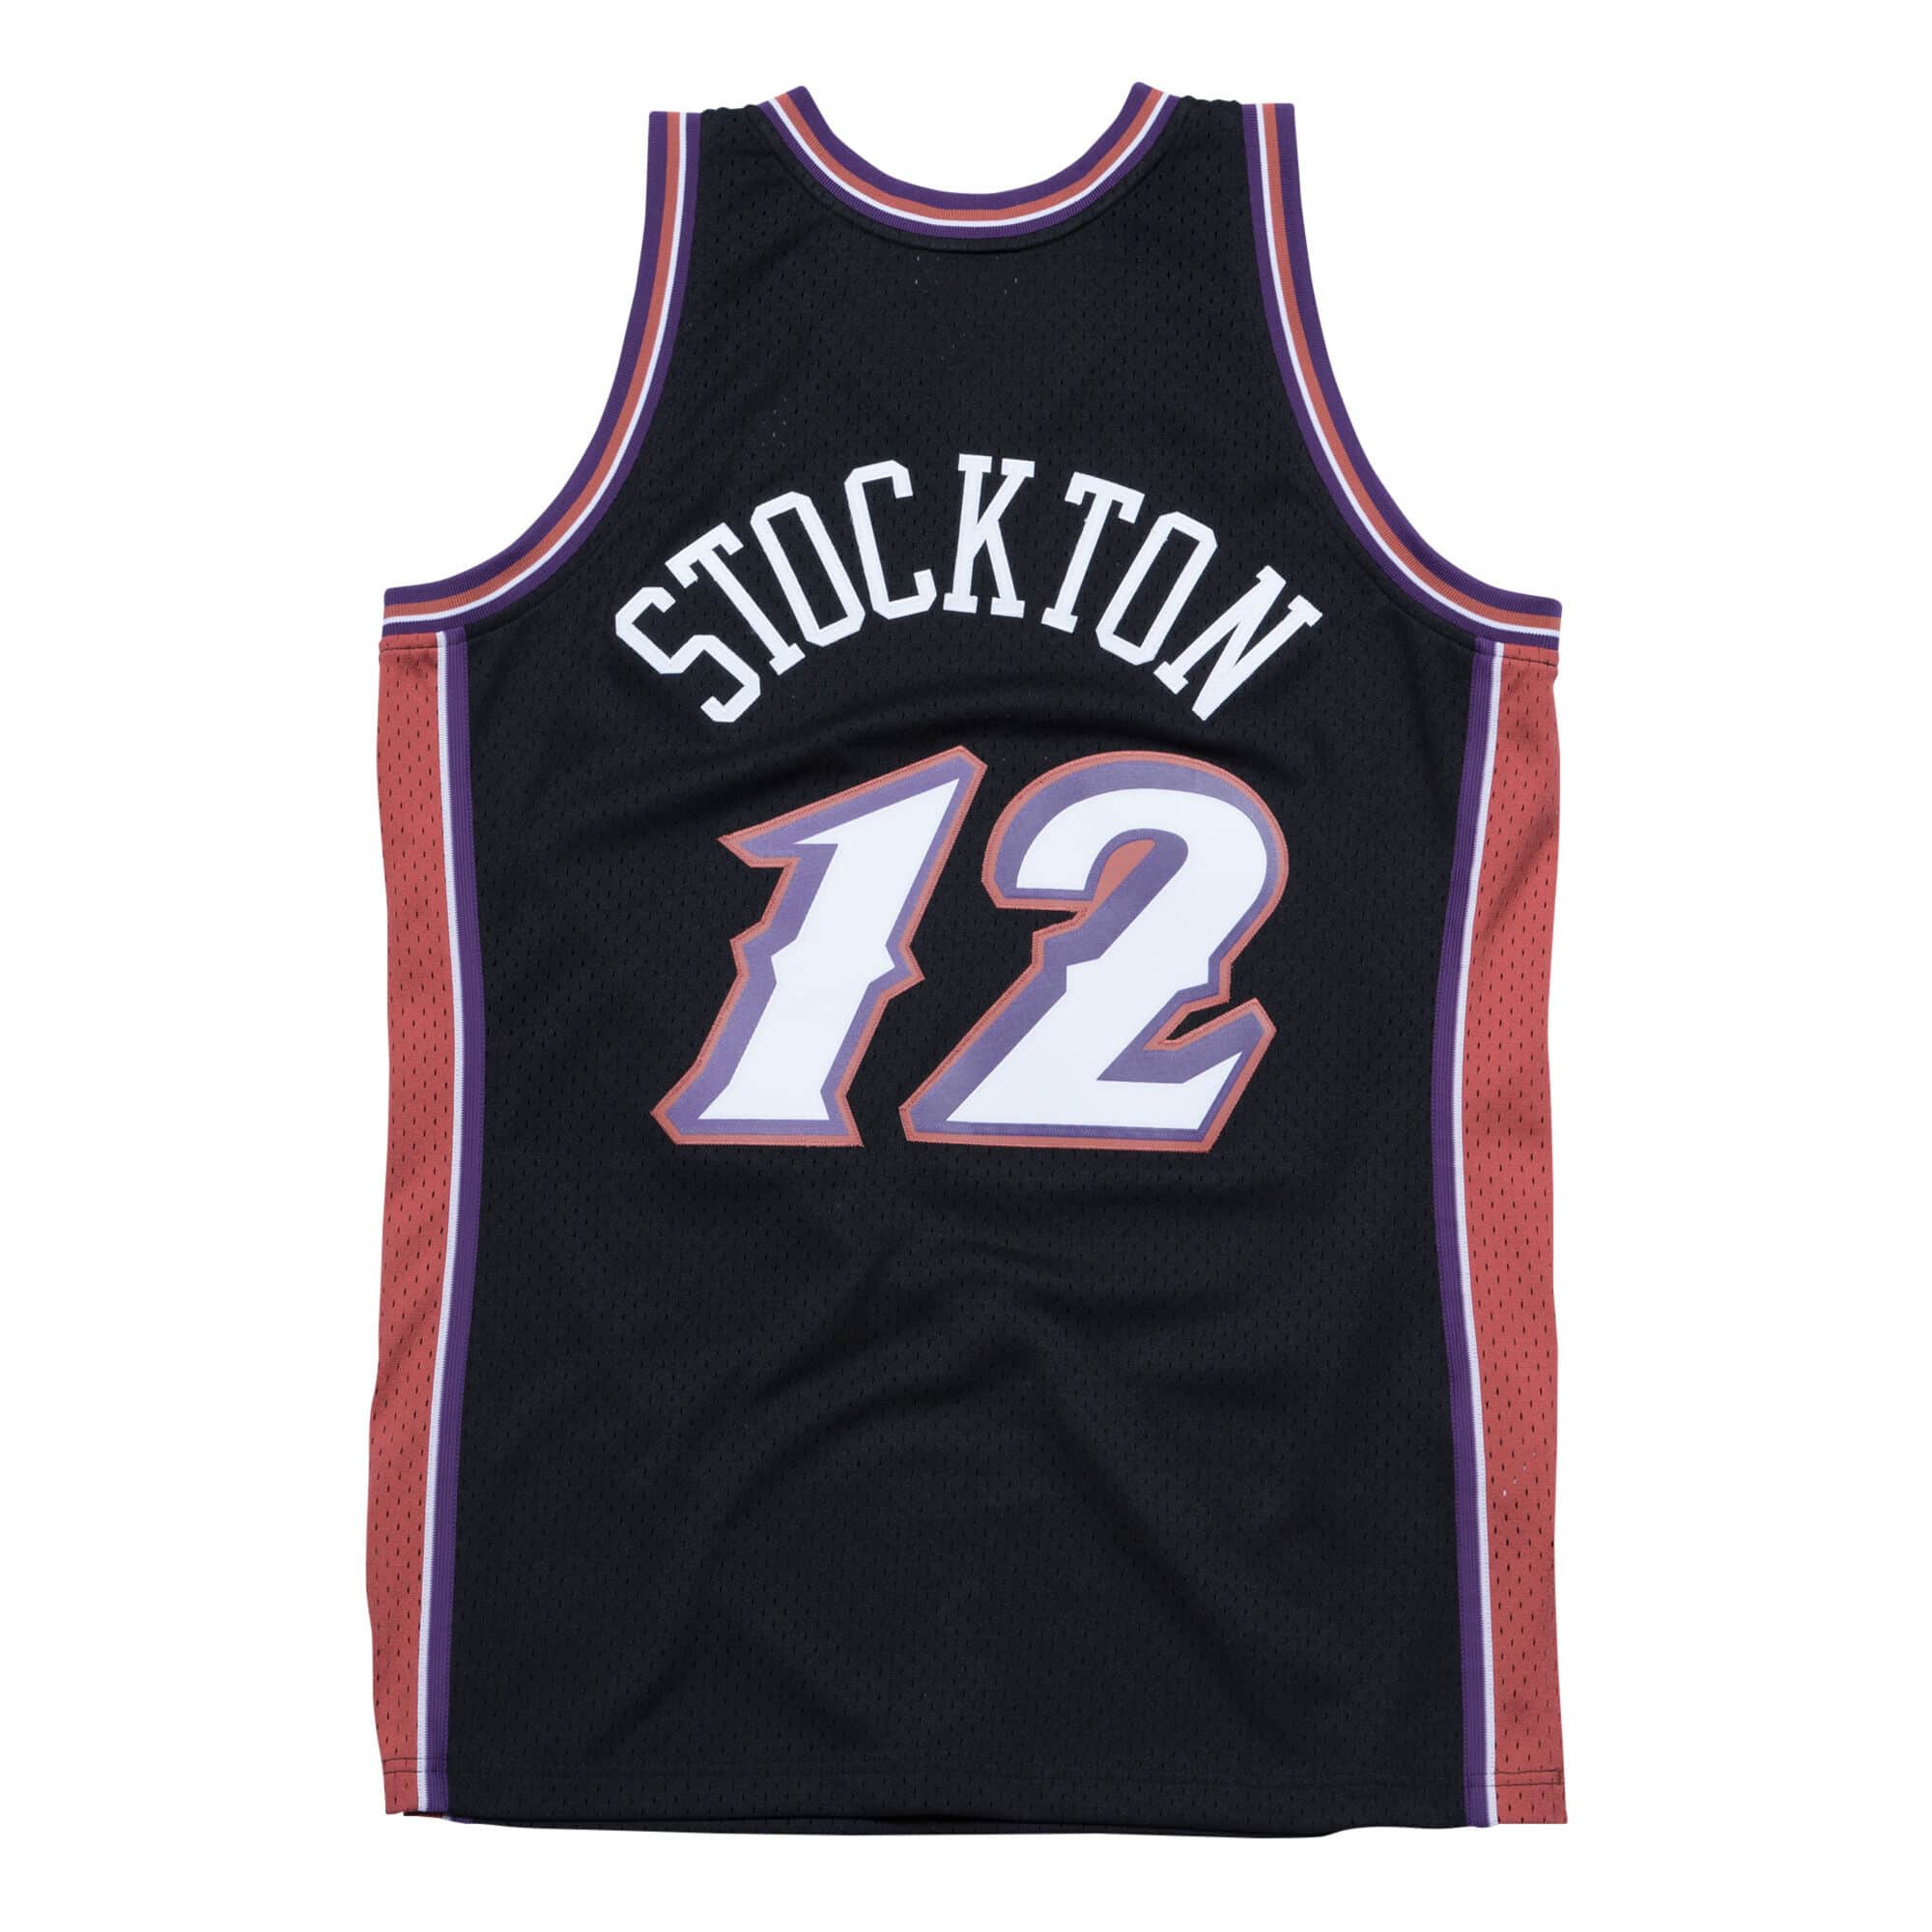 Stockton Heat AHL Practice Jersey Set - Black & White - Size 56